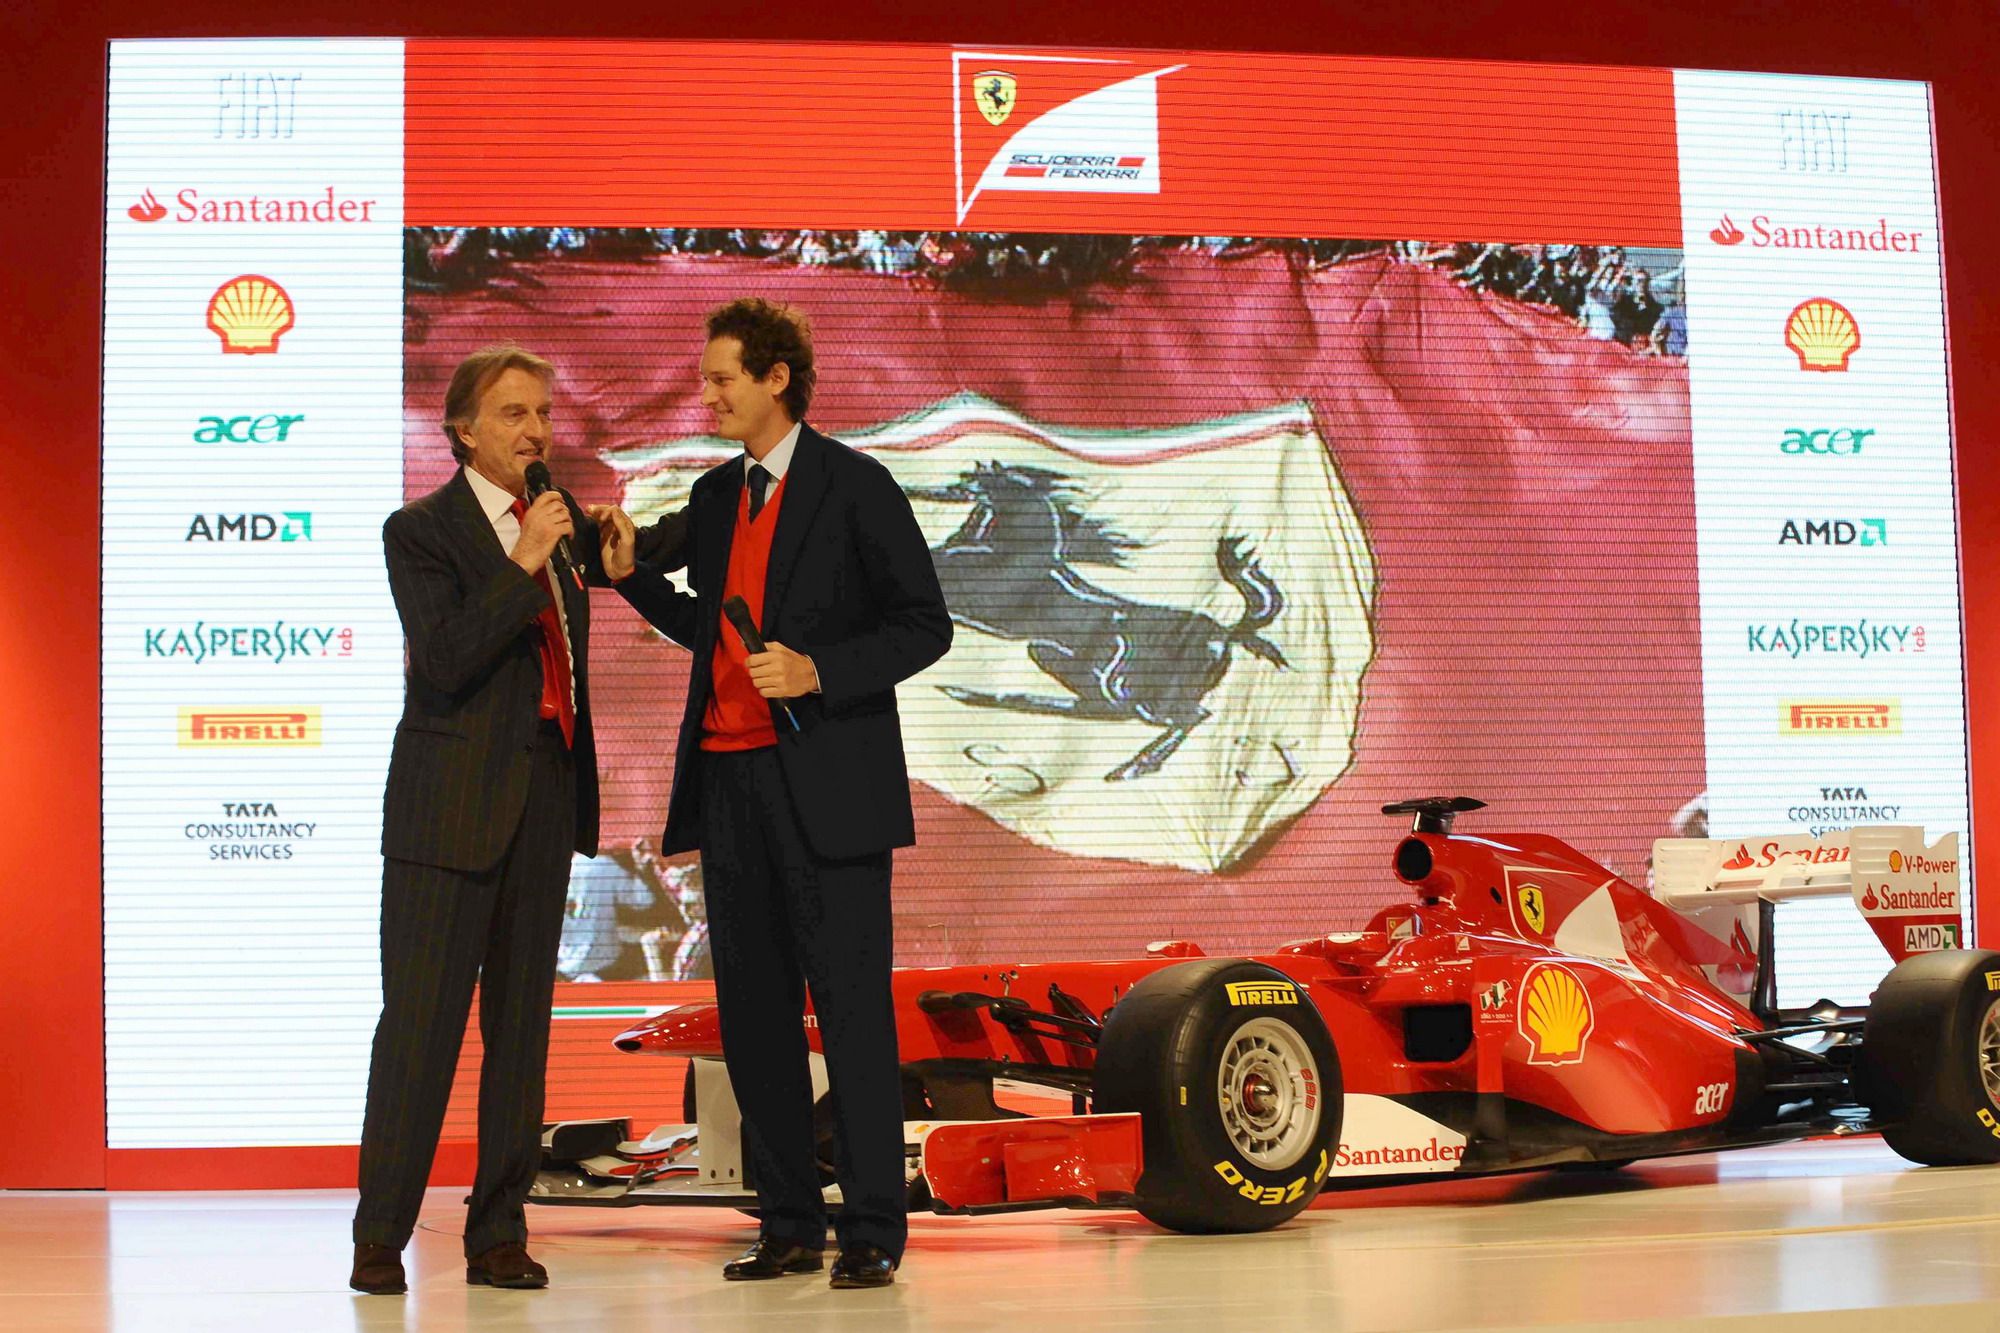 2011 Ferrari 150° Italia Formula 1 Car 